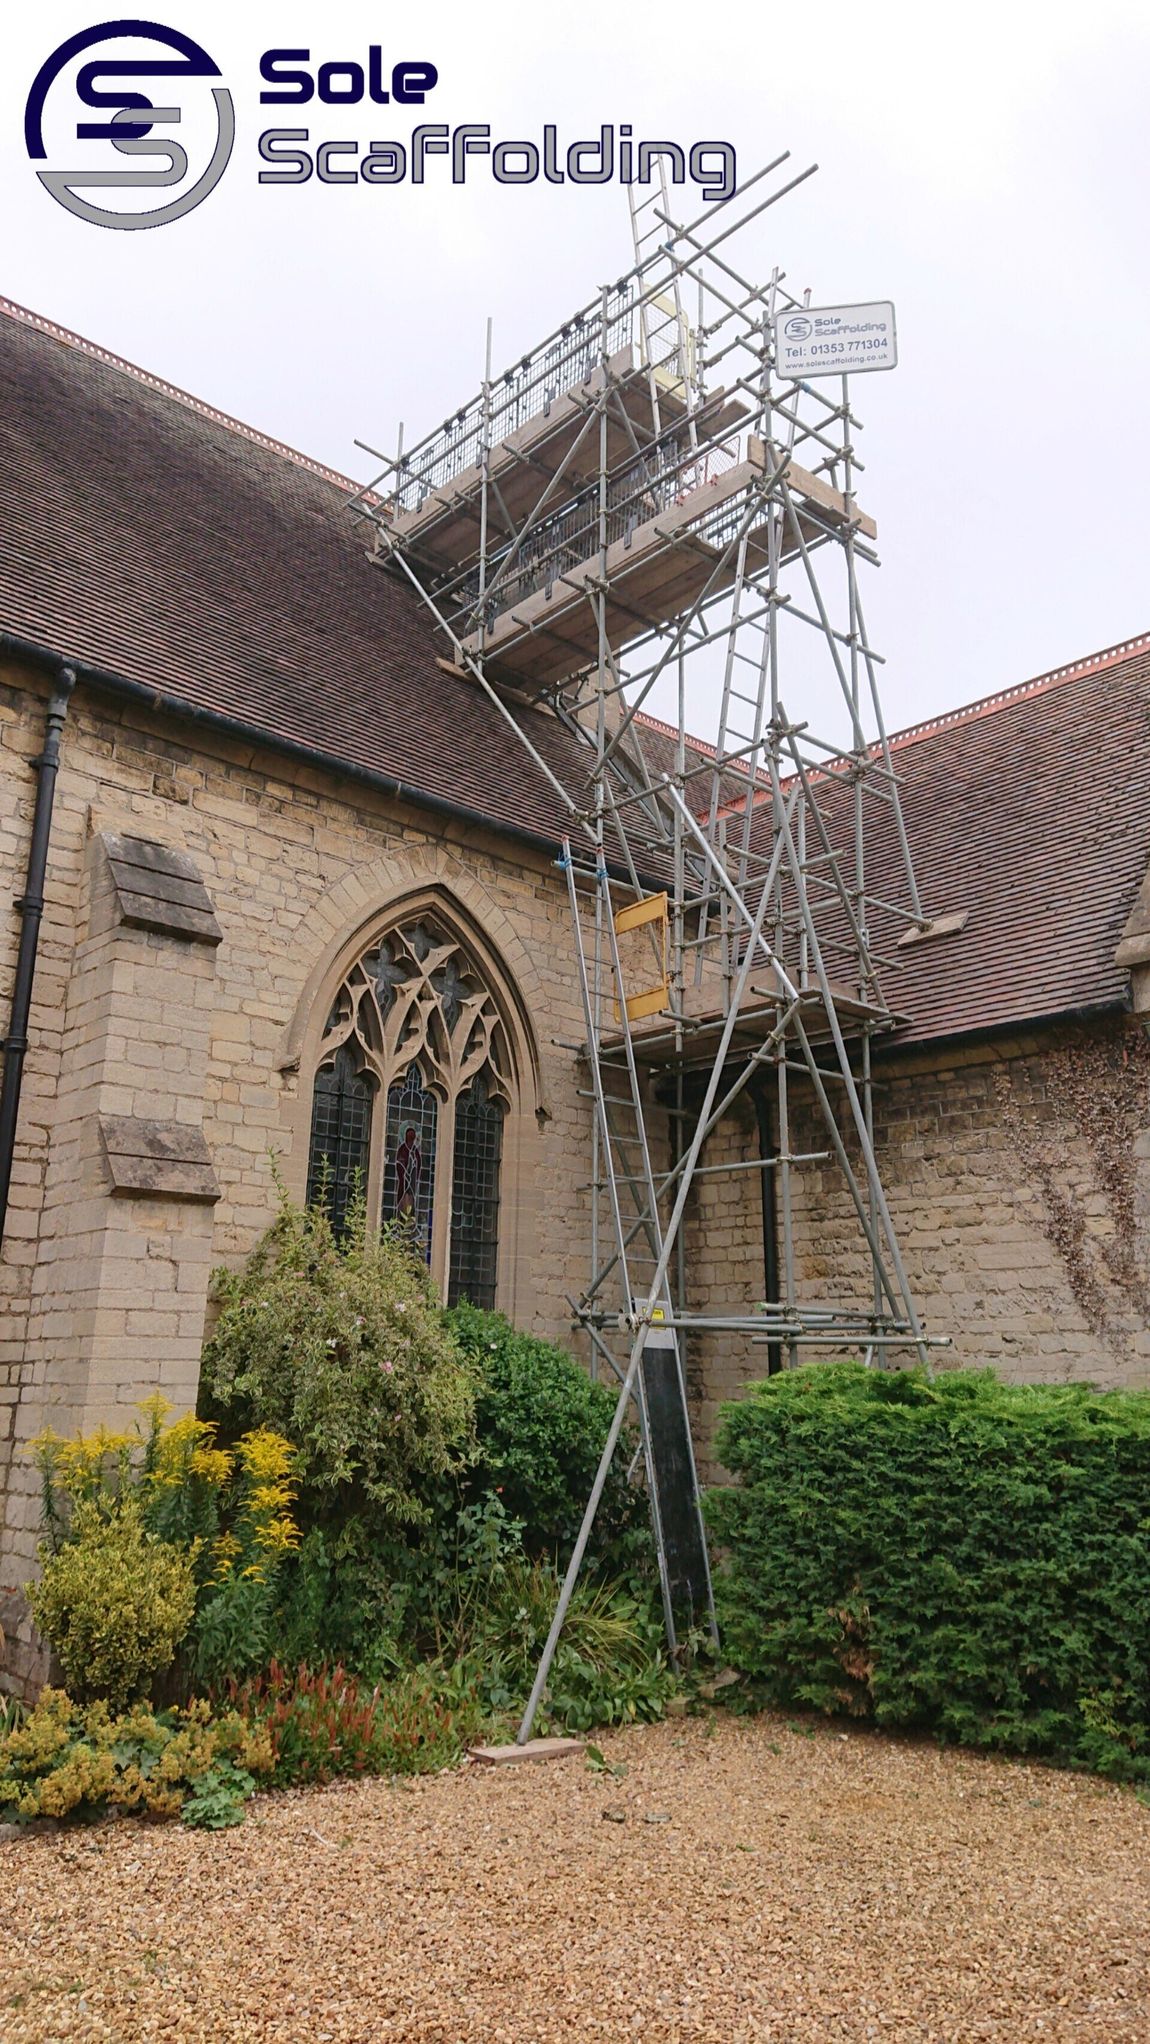 sole scaffolding - chimney scaffold for flue install in Ely